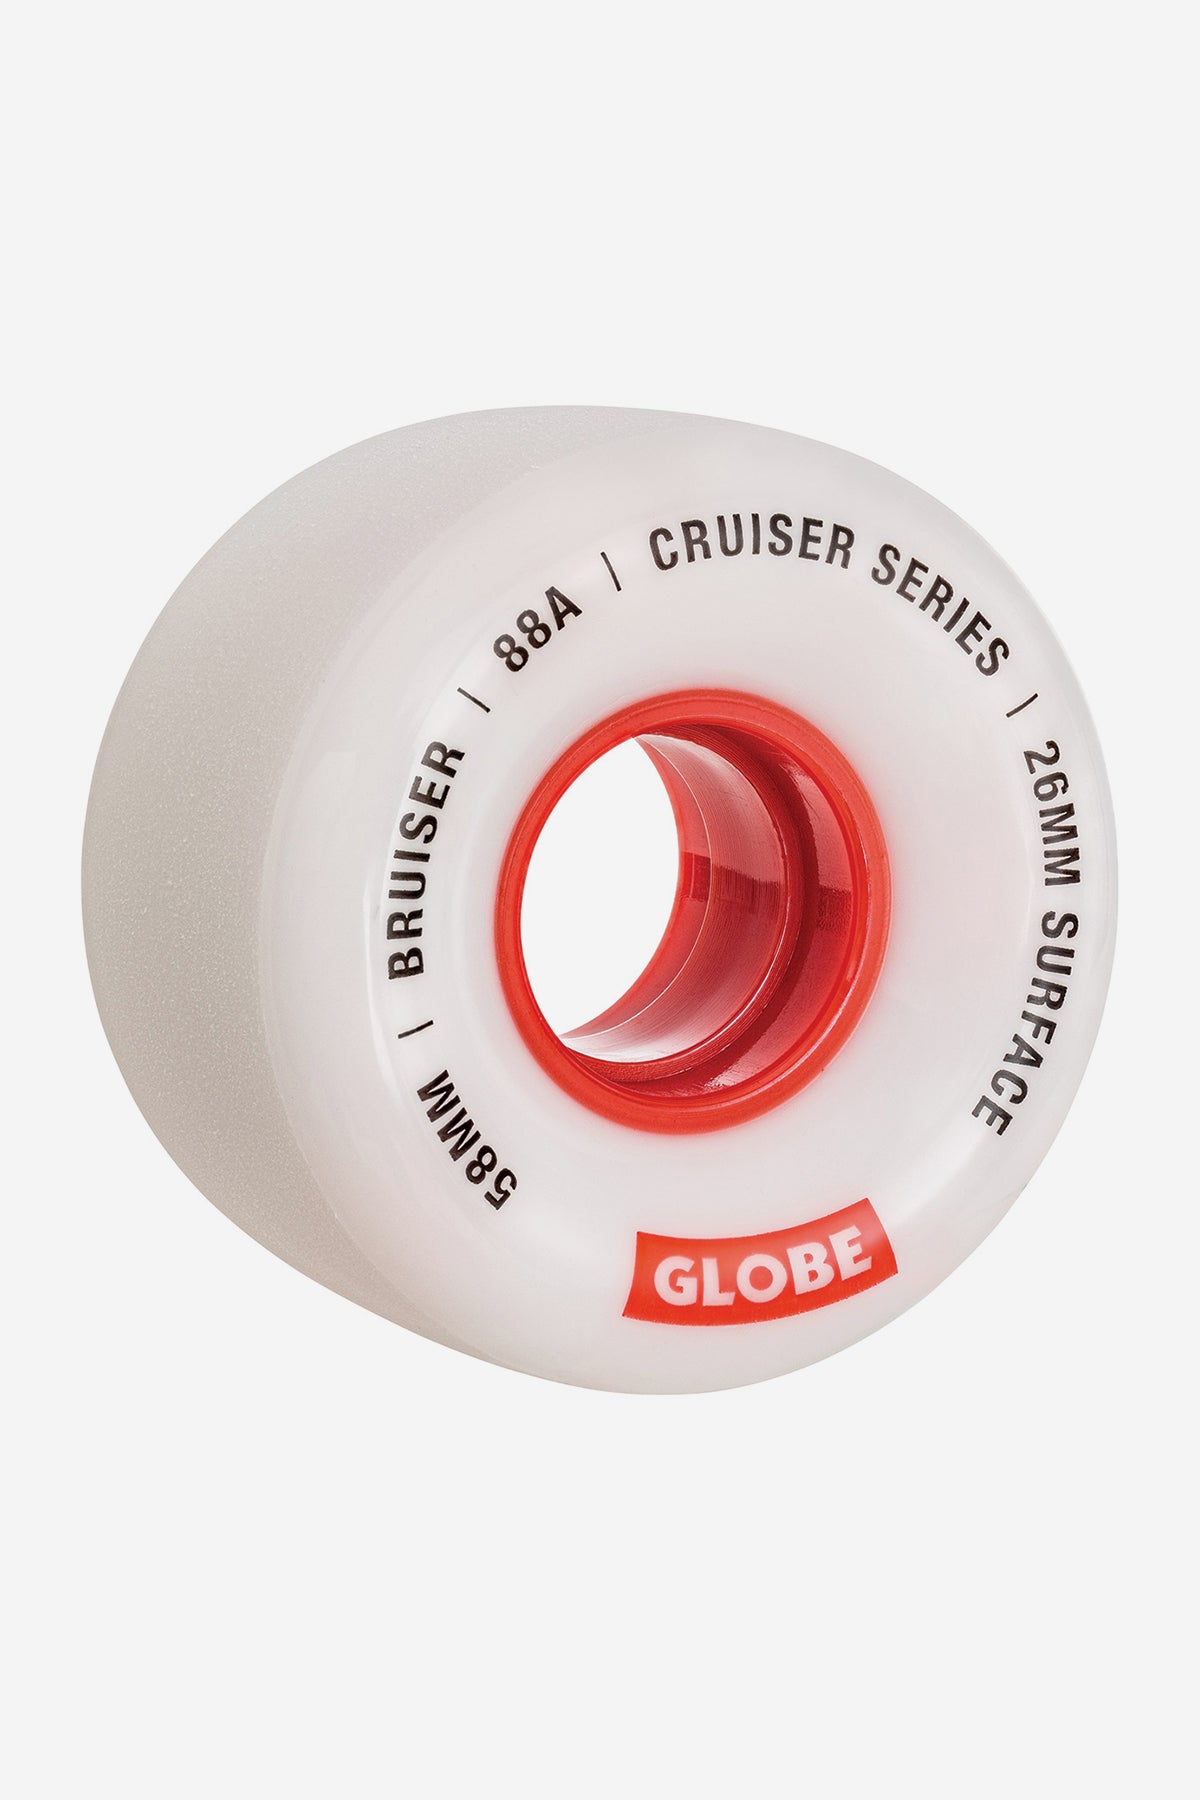 Bruiser Cruiser Wheel 58mm 4 Pack - Globe Brand AU